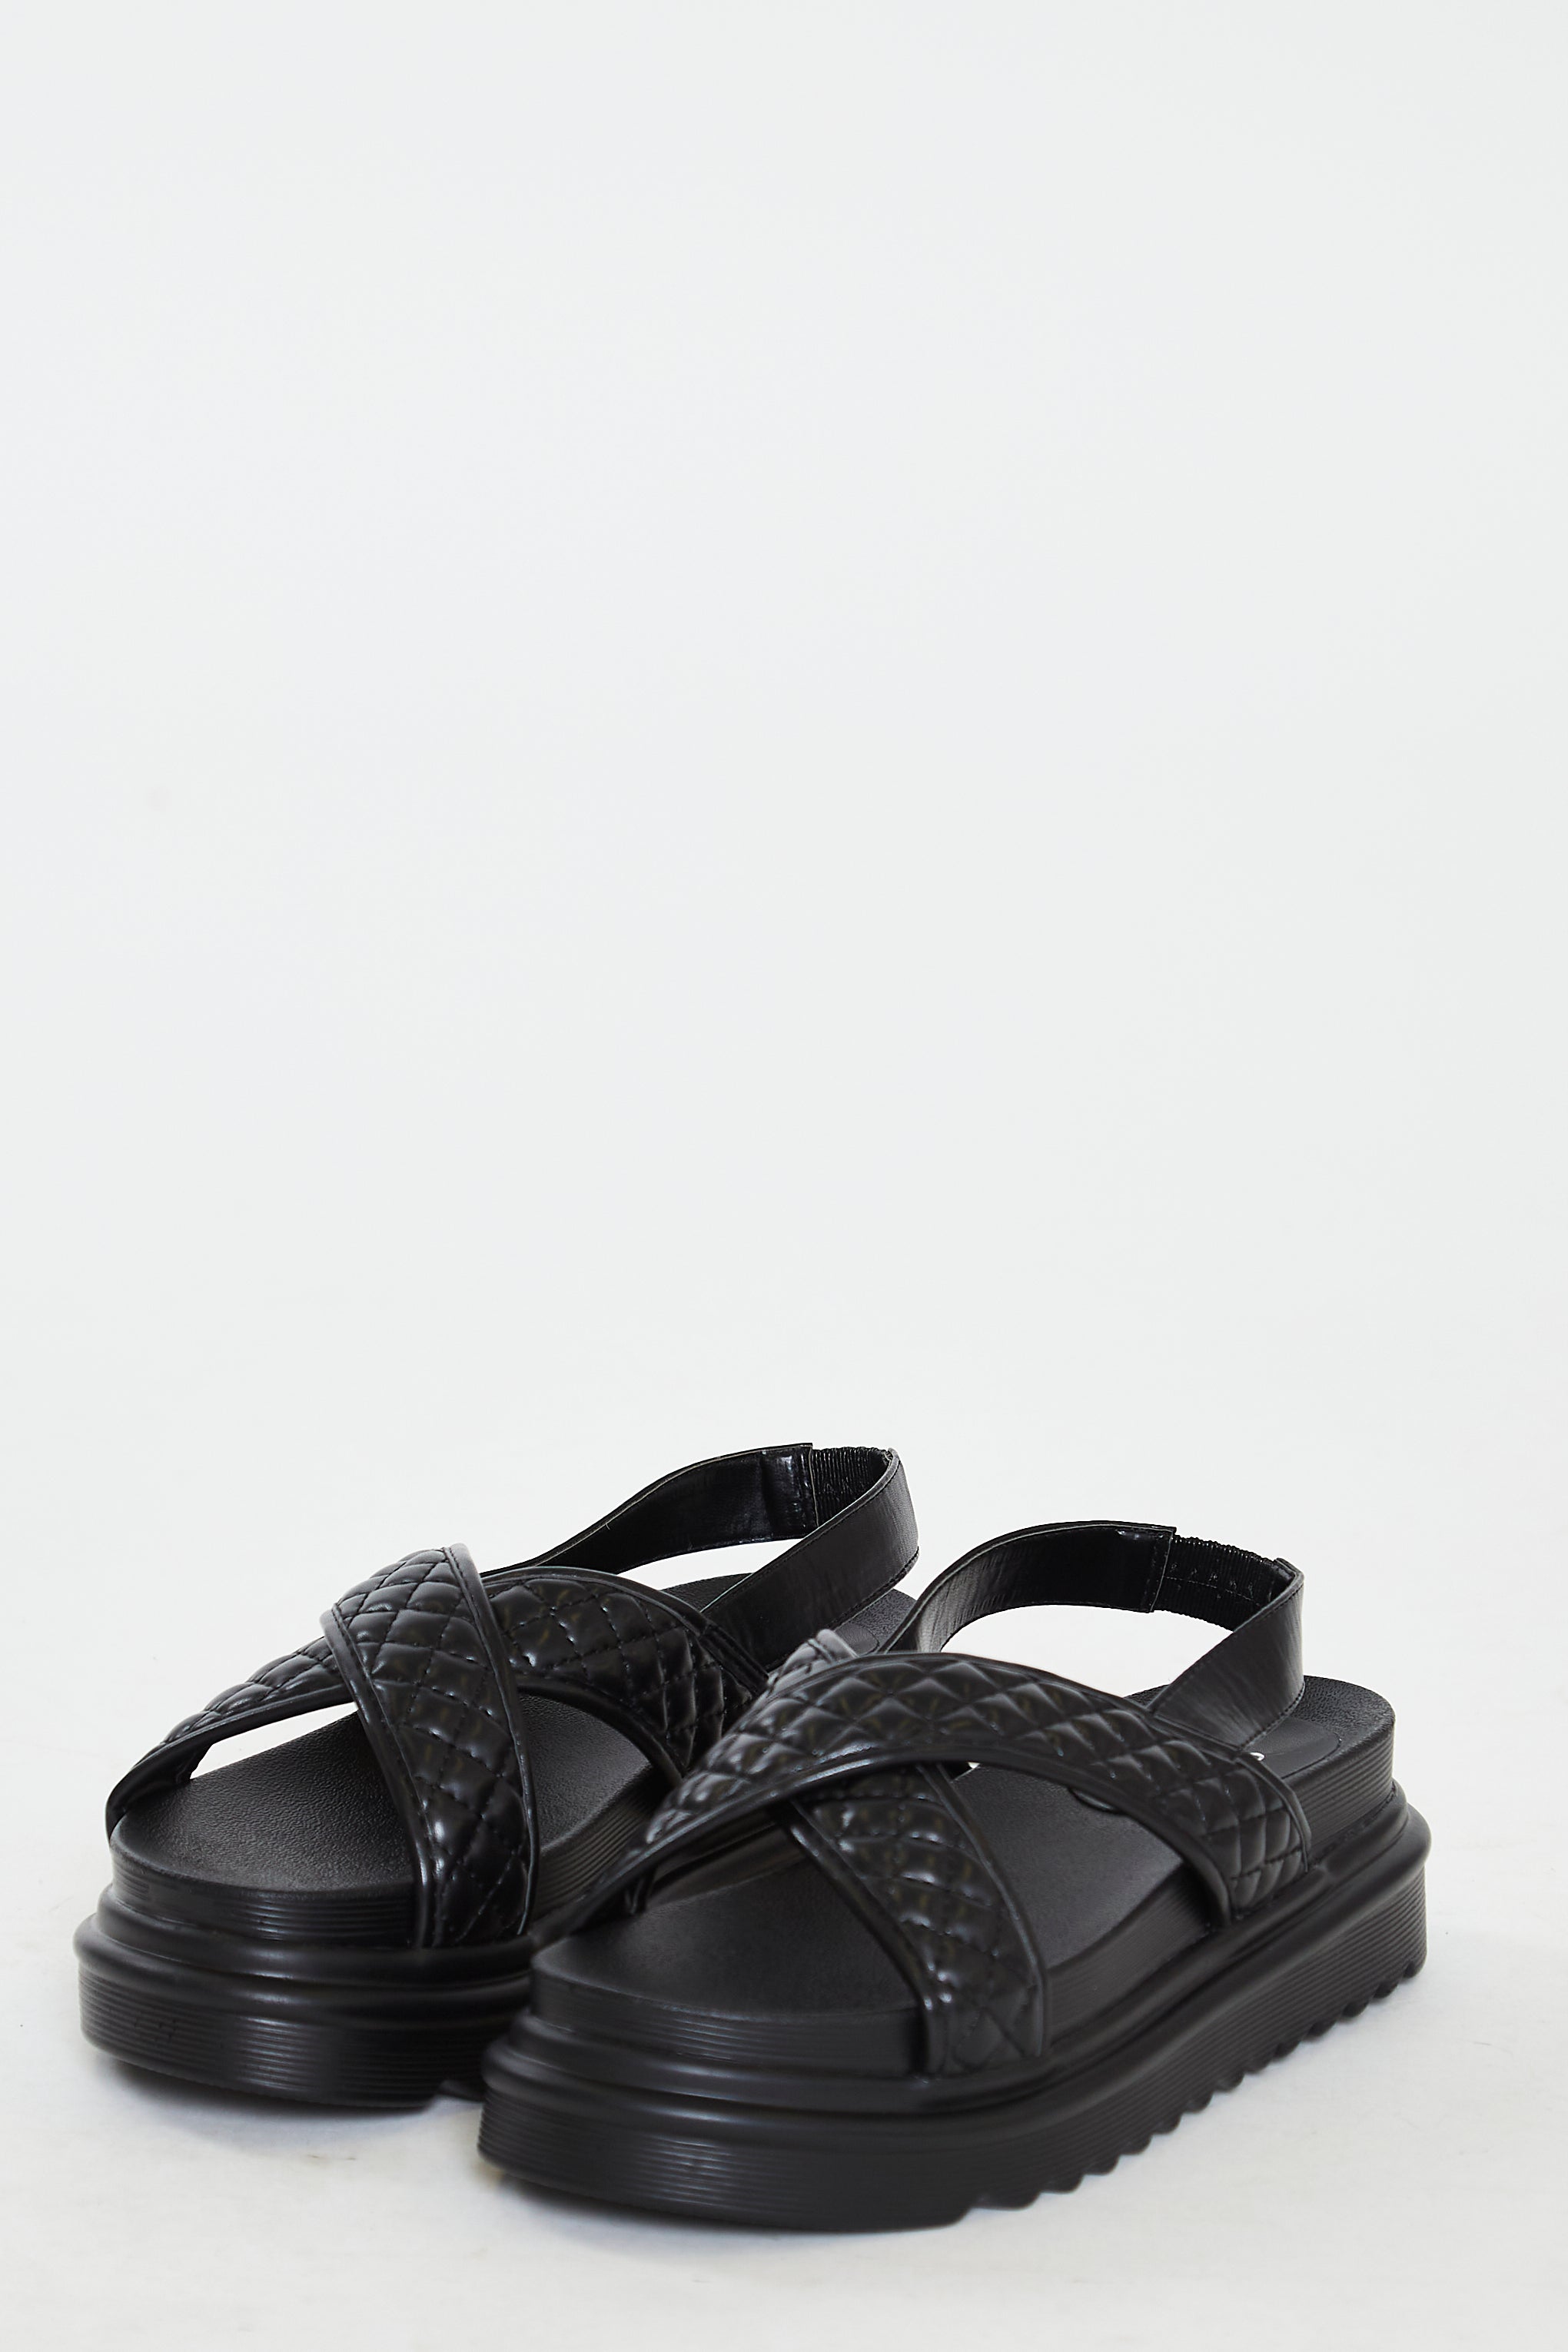 Glamorous Black Cross Strap Flatform Sandals